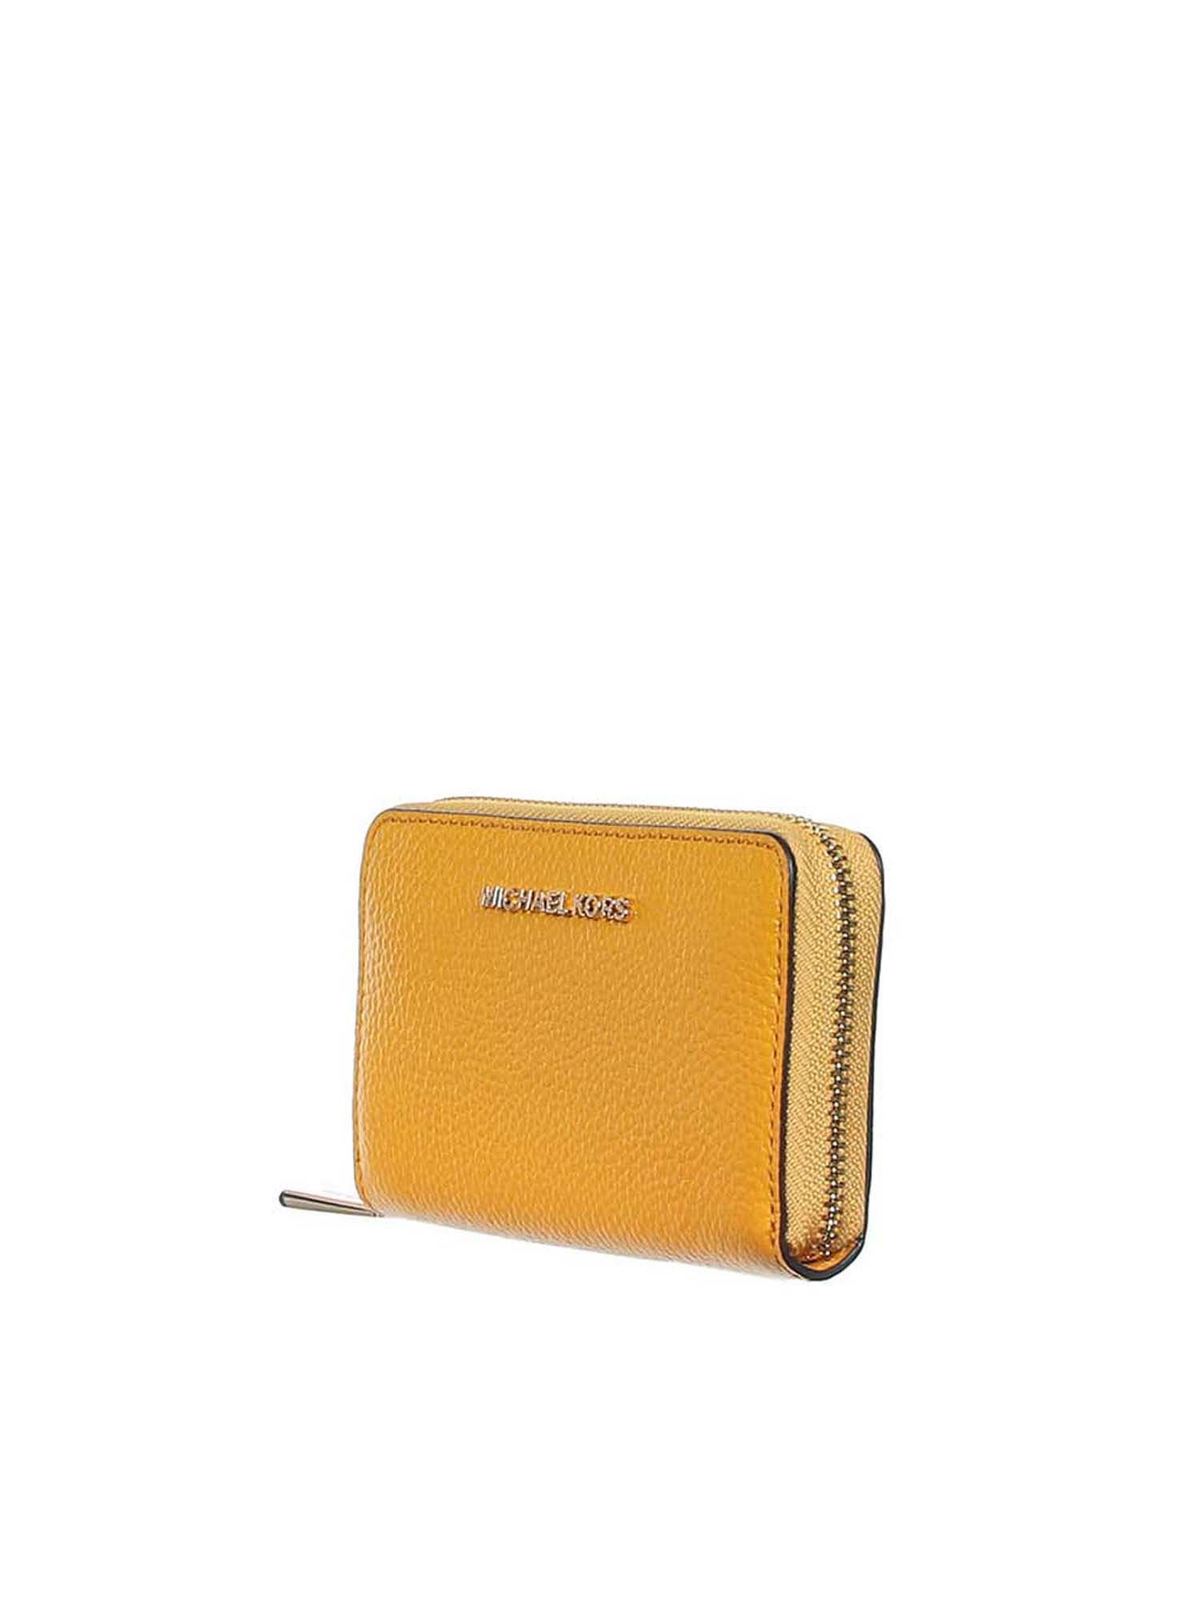 Wallets & purses Michael Kors - Jet Set small wallet in yellow -  34H9GJ6D0L746